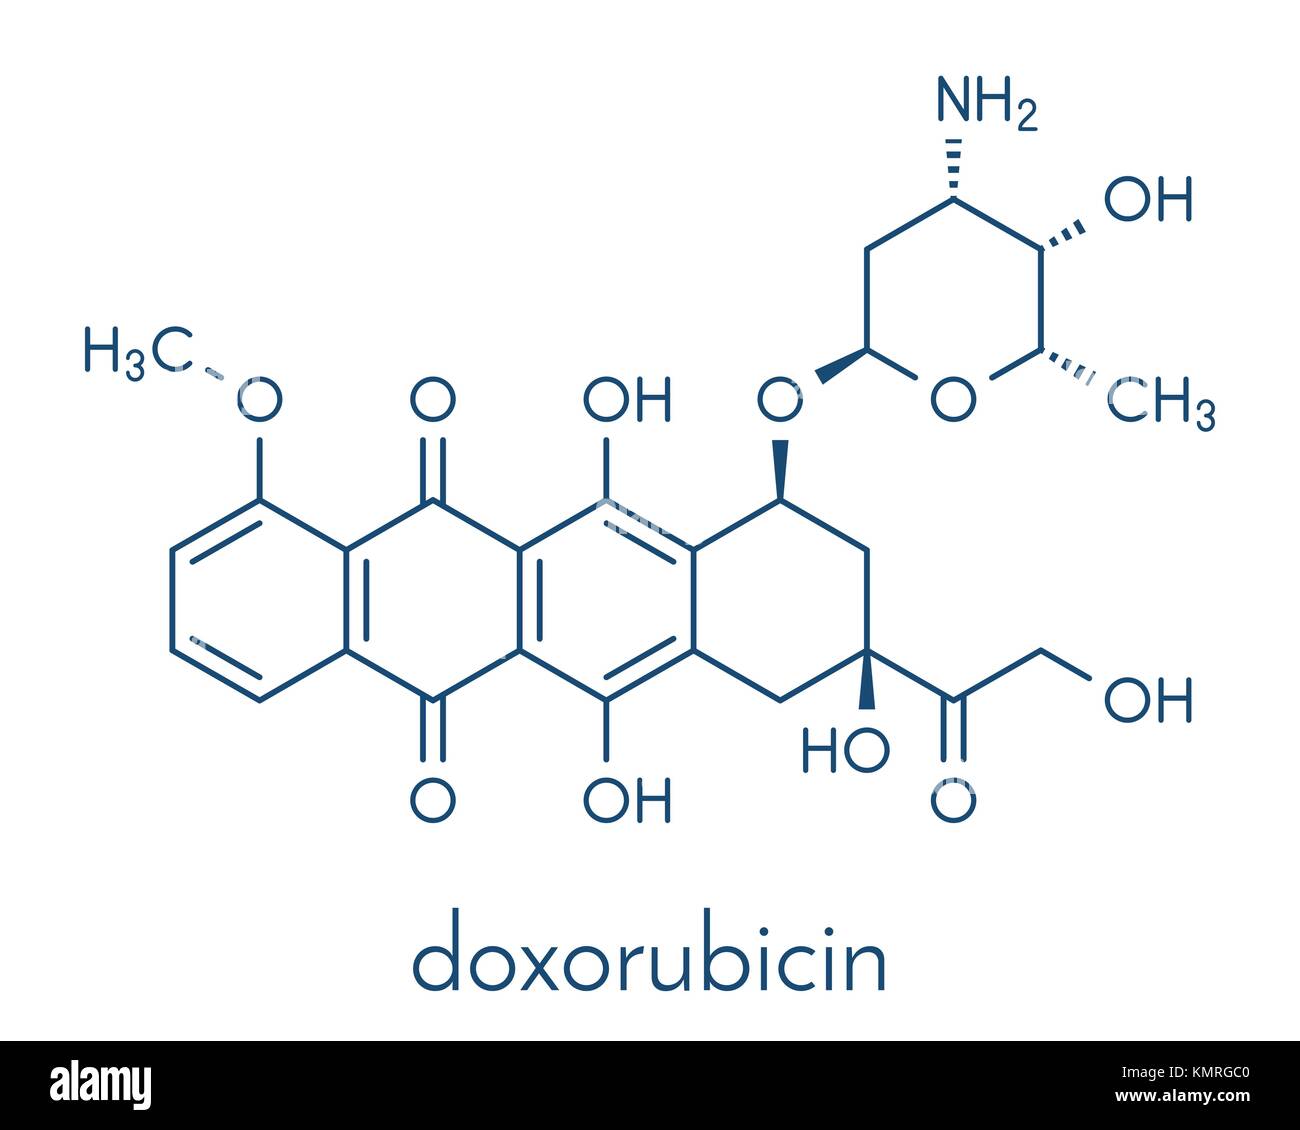 Doxorubicin cancer chemotherapy drug molecule. Skeletal formula. Stock Vector